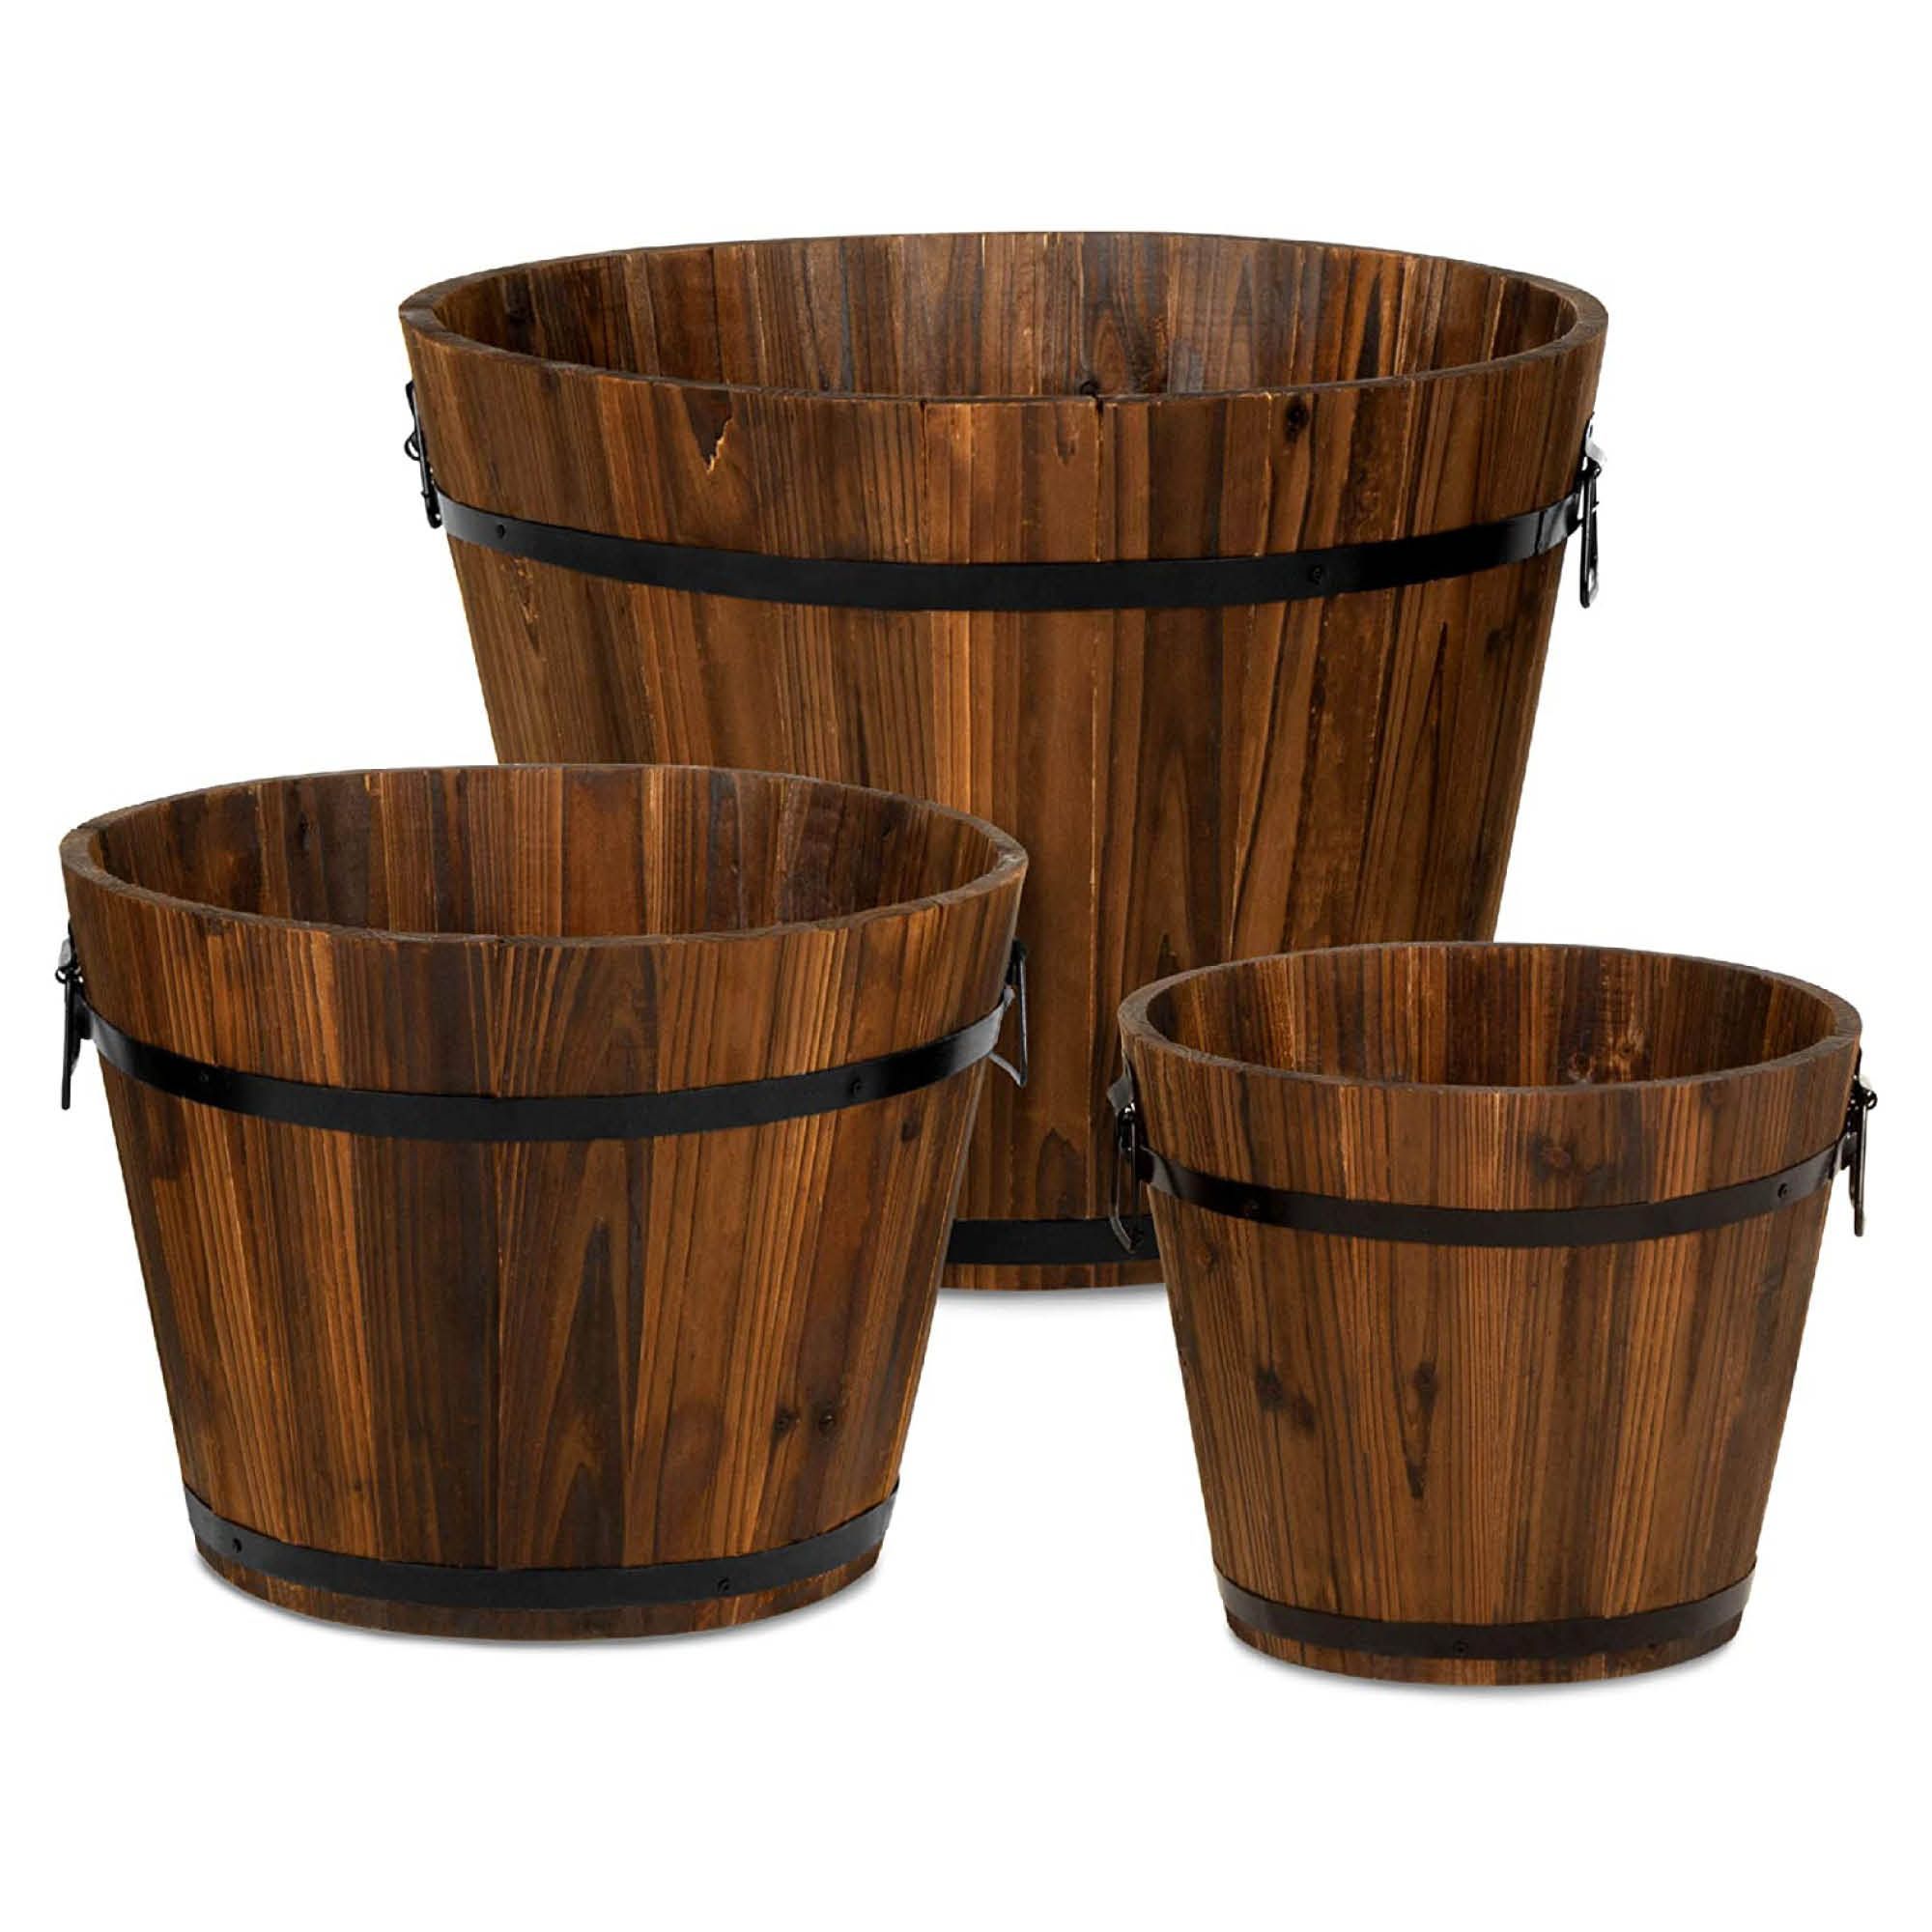 Rustic Wooden Bucket Barrel Planters 